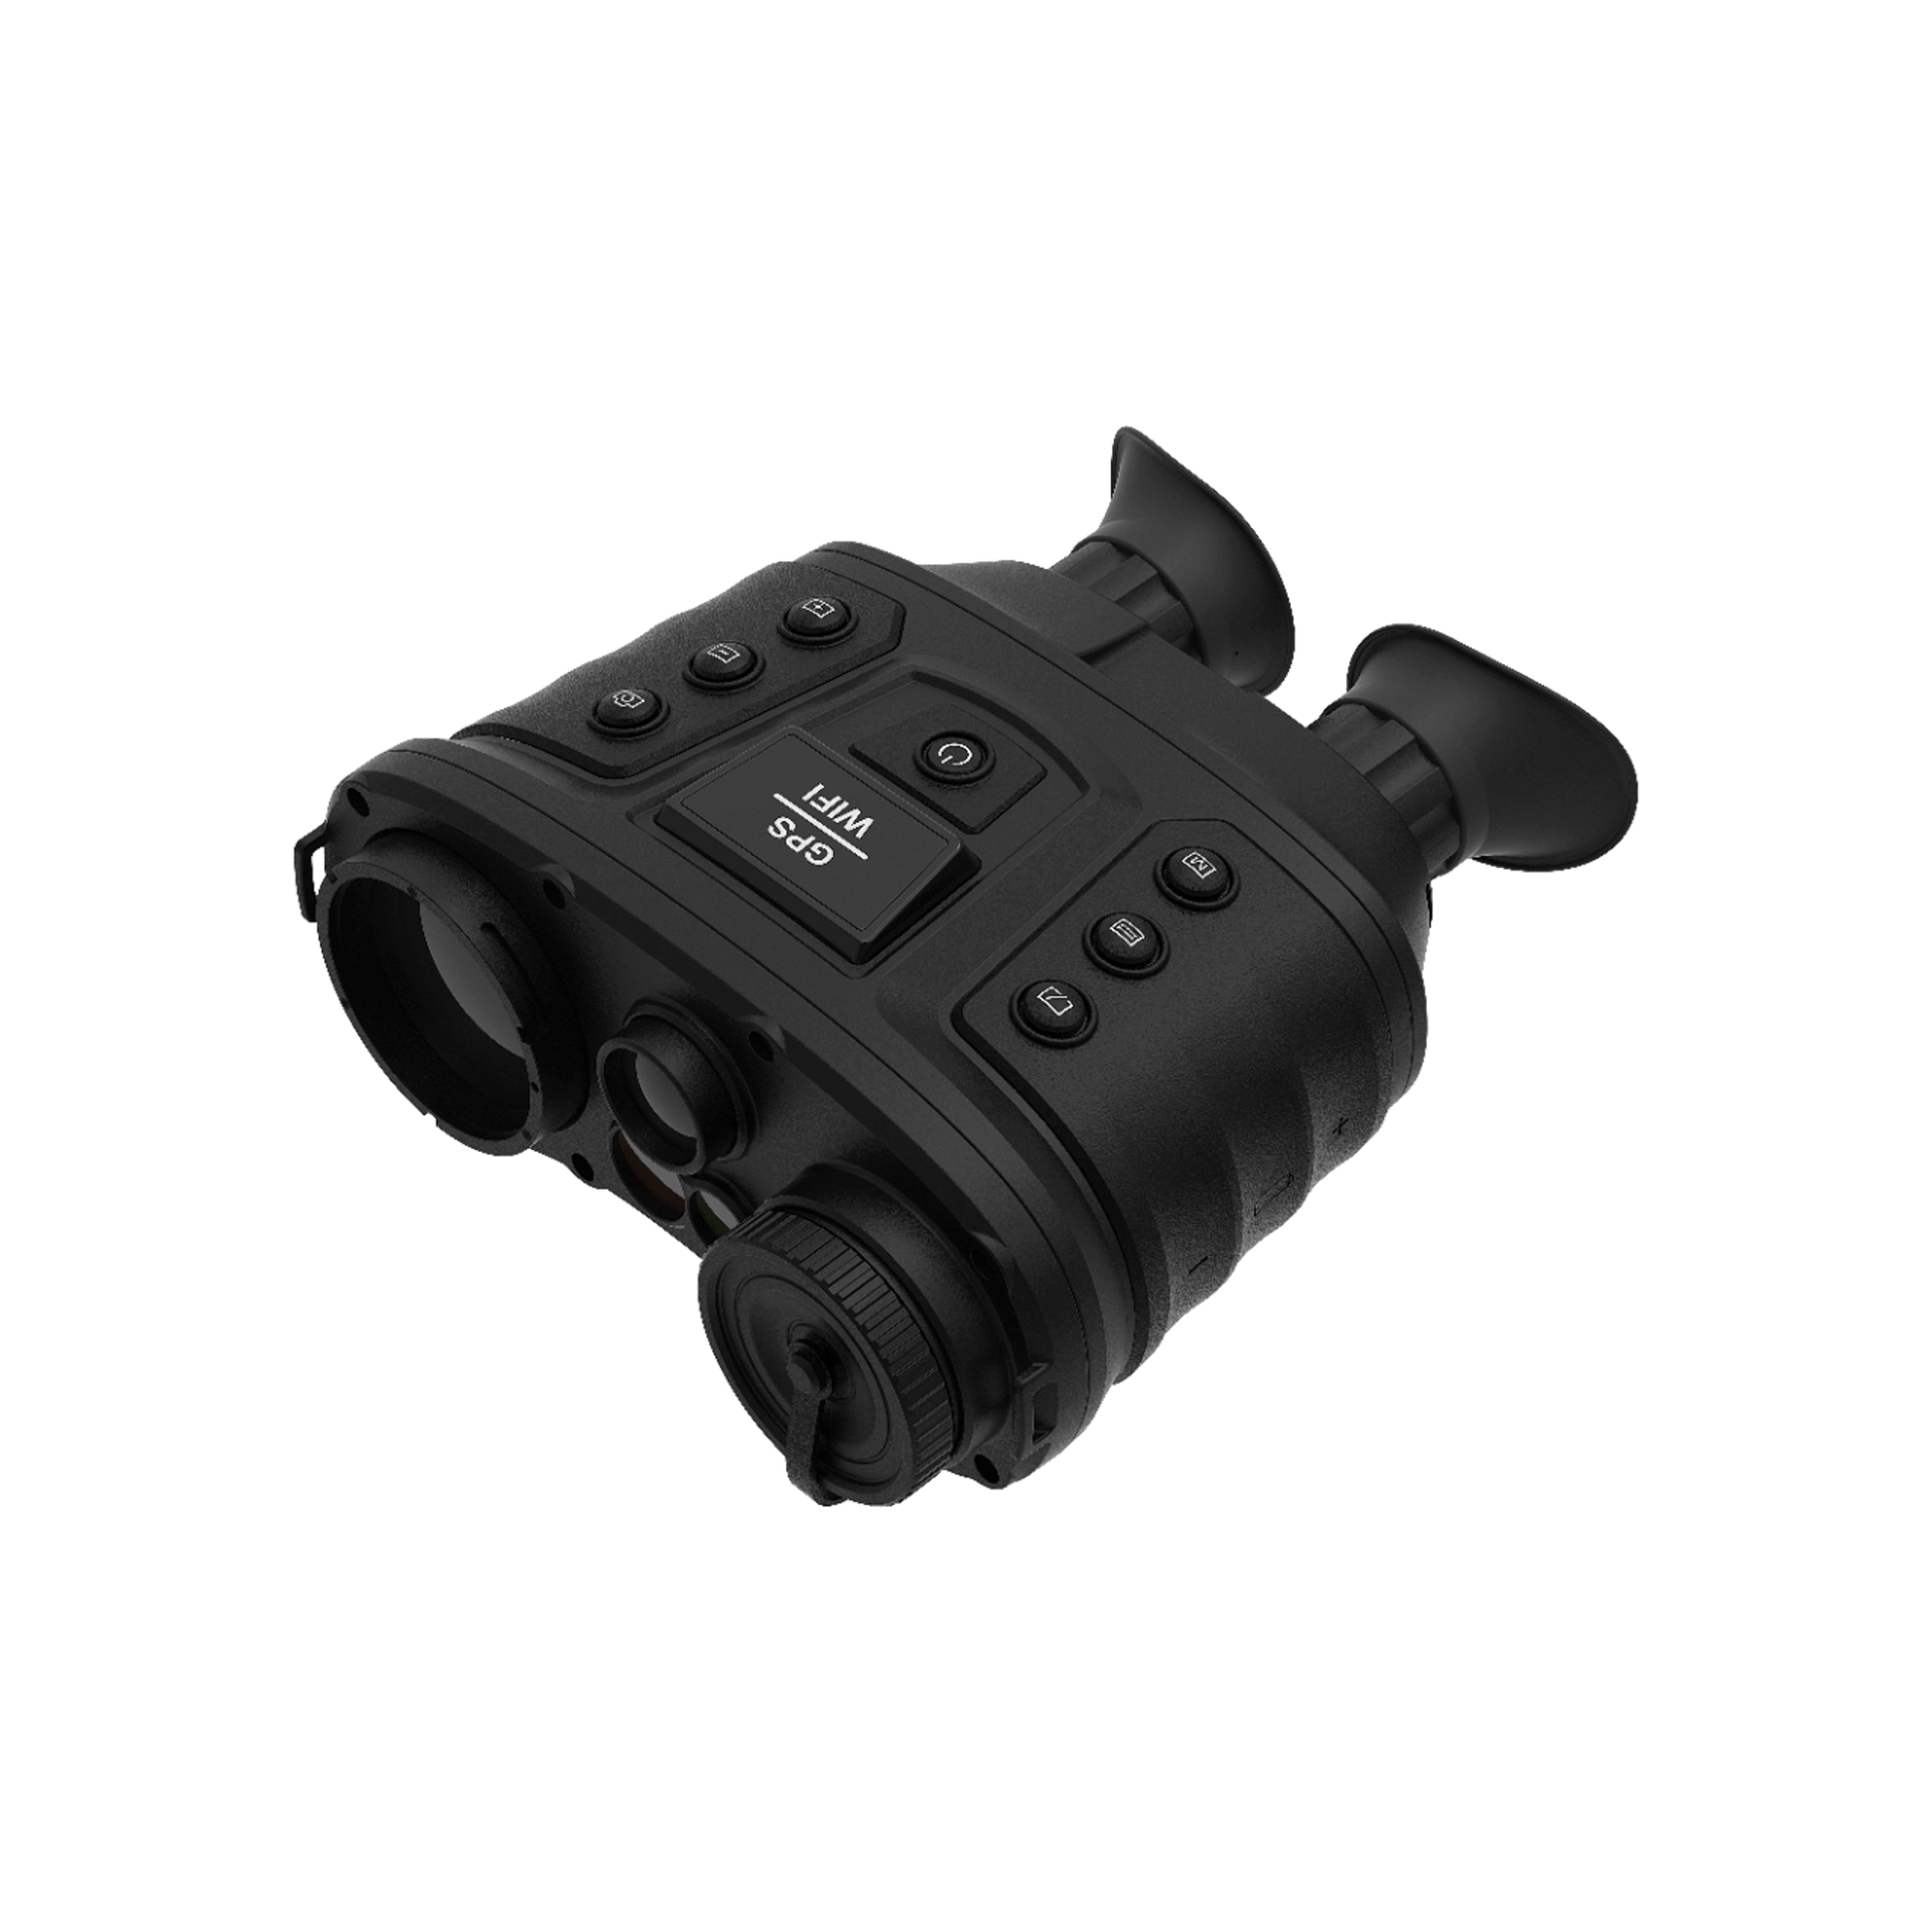 Cape Thermal Imaging Binoculars for Sale - Hikvision DS-2TS36-50VI/WL Multifunction heat vision binoculars